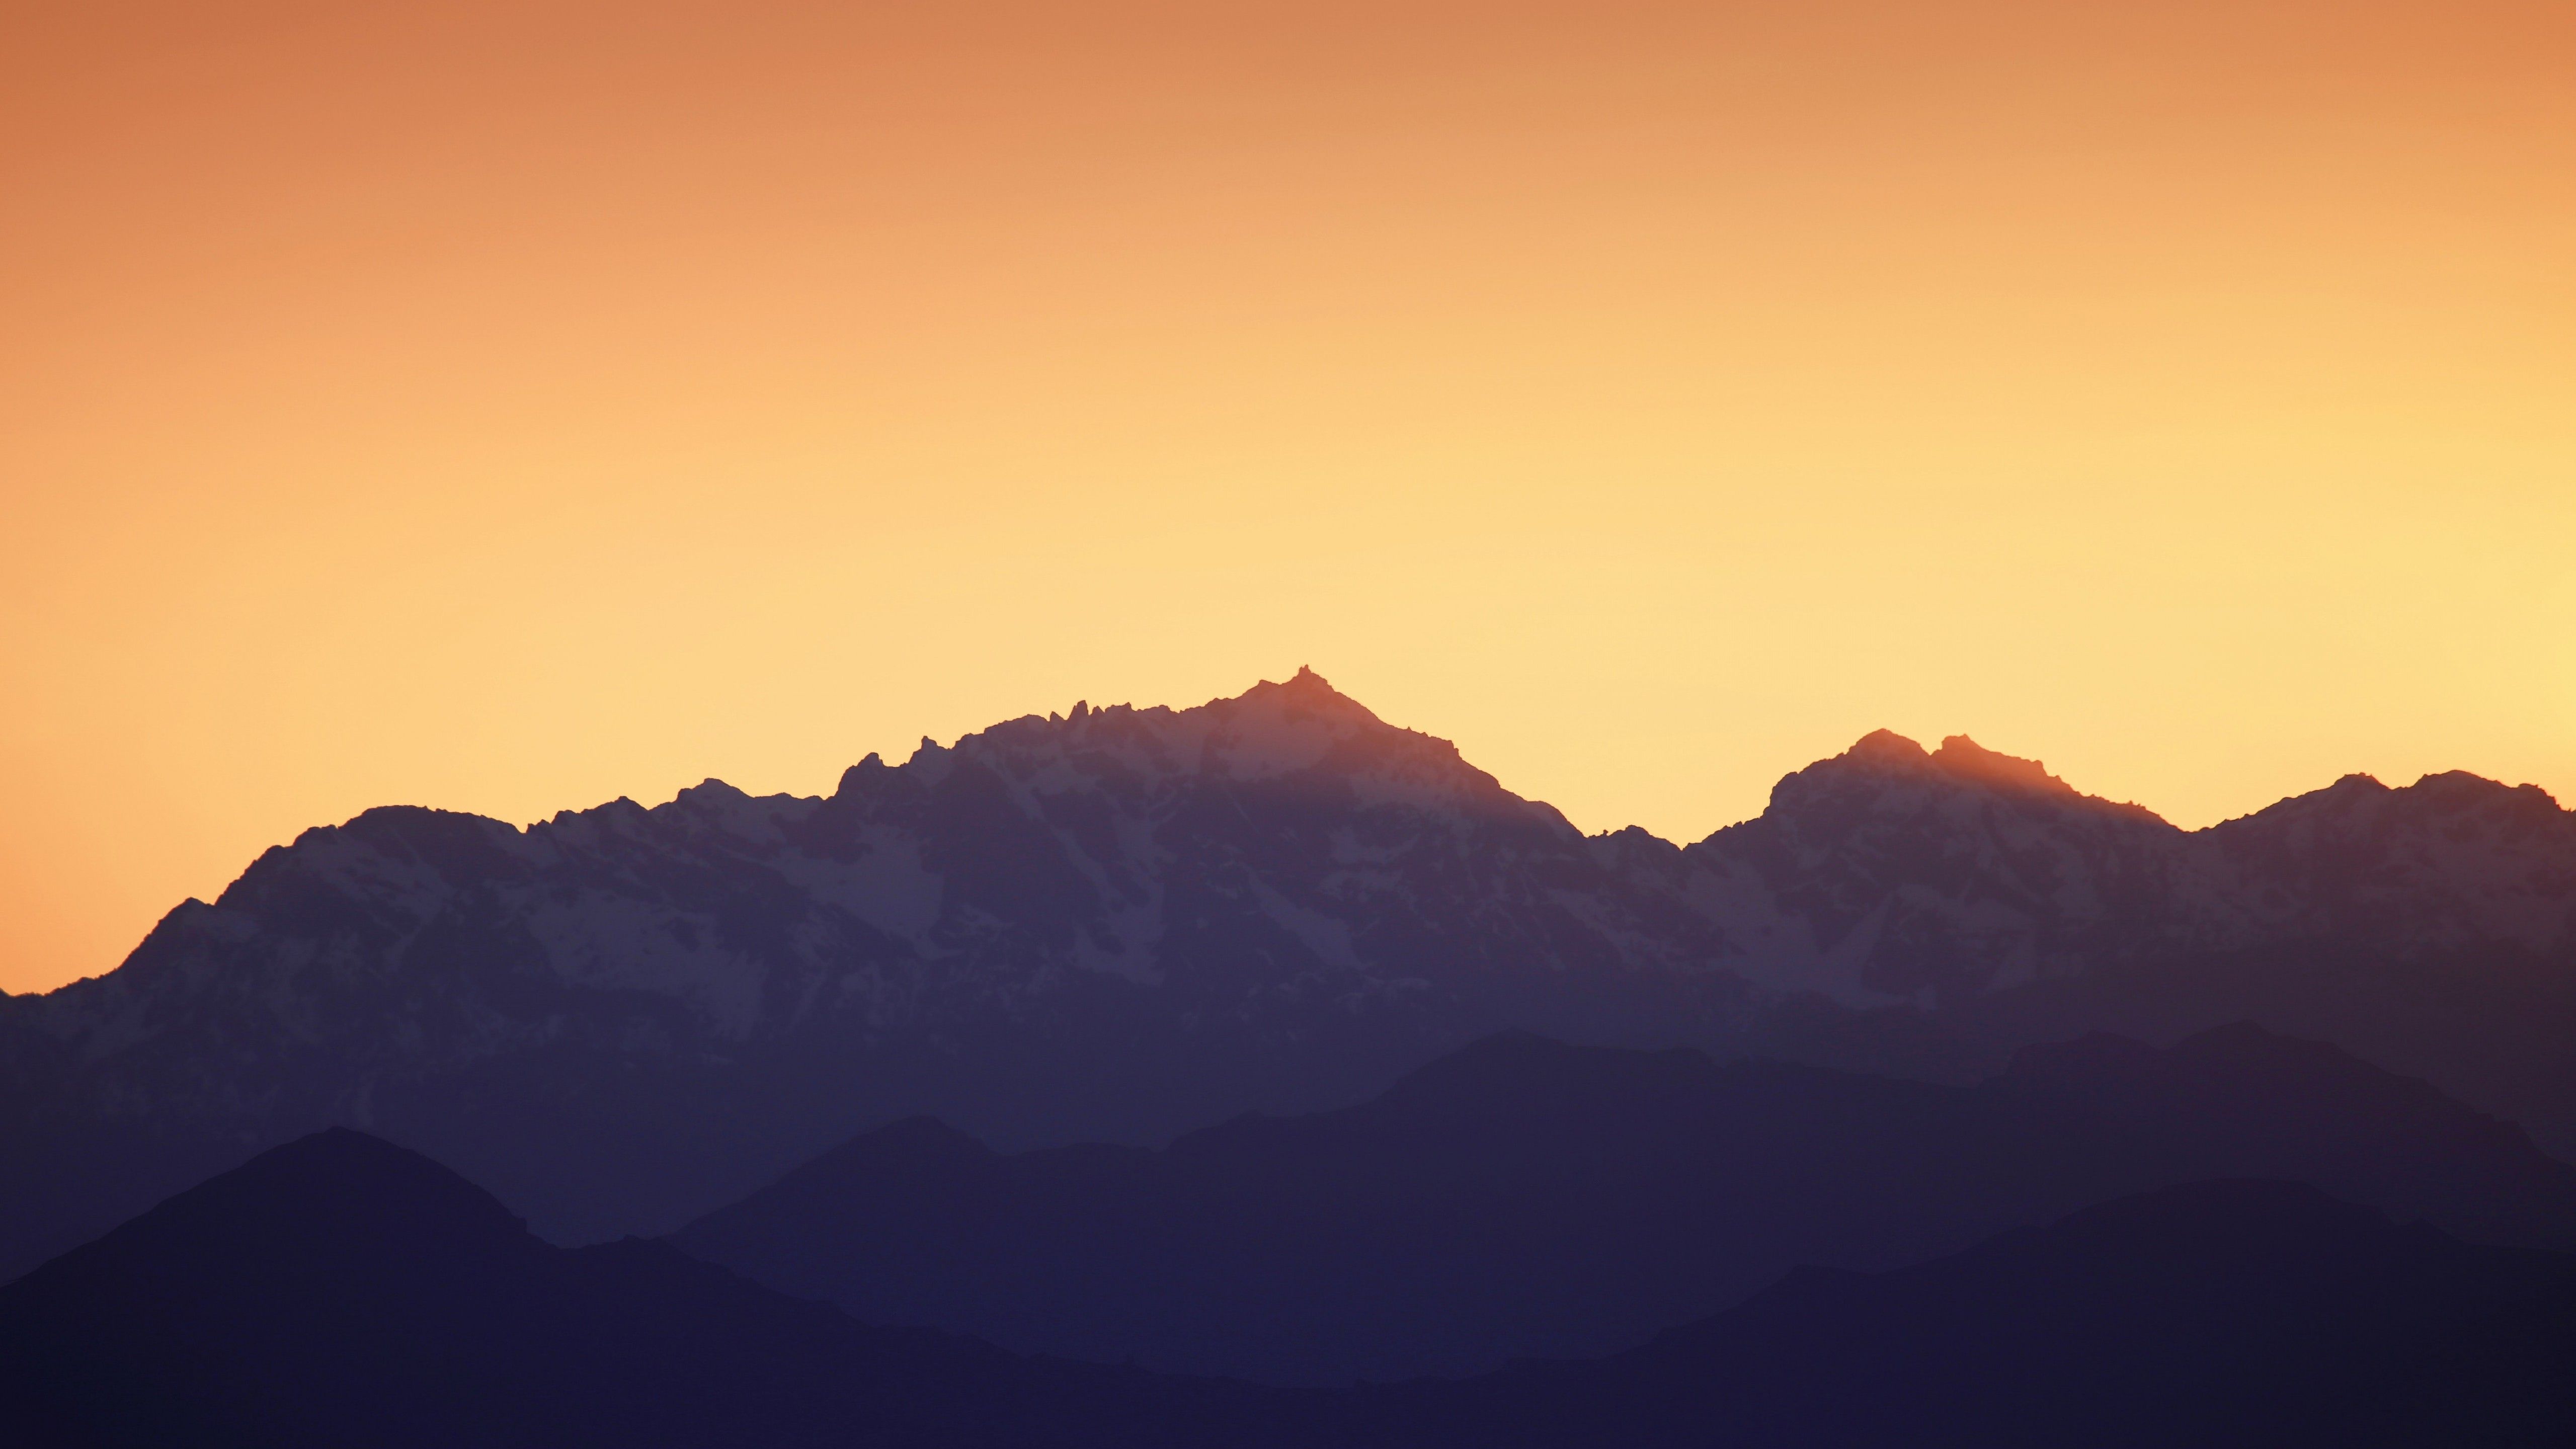 Mountains 4K Wallpaper, Sunset, Silhouette, Yellow sky, Dusk, Sunrise, Seattle, Washington, Nature